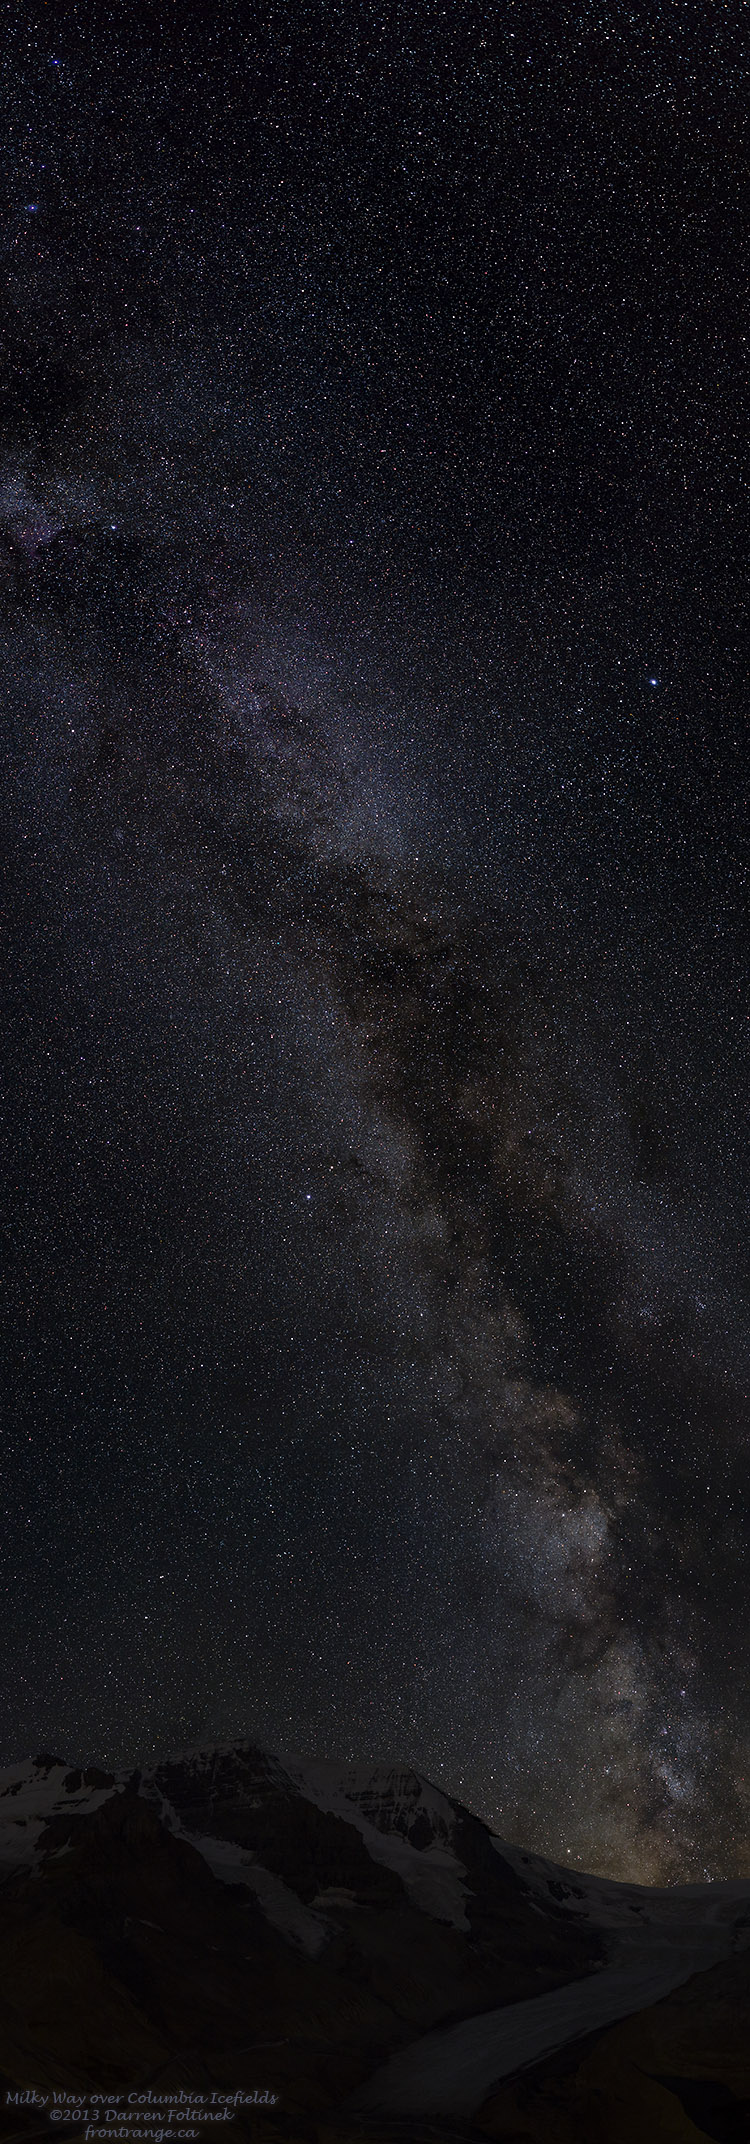 Milky Way over Mt. Andromeda